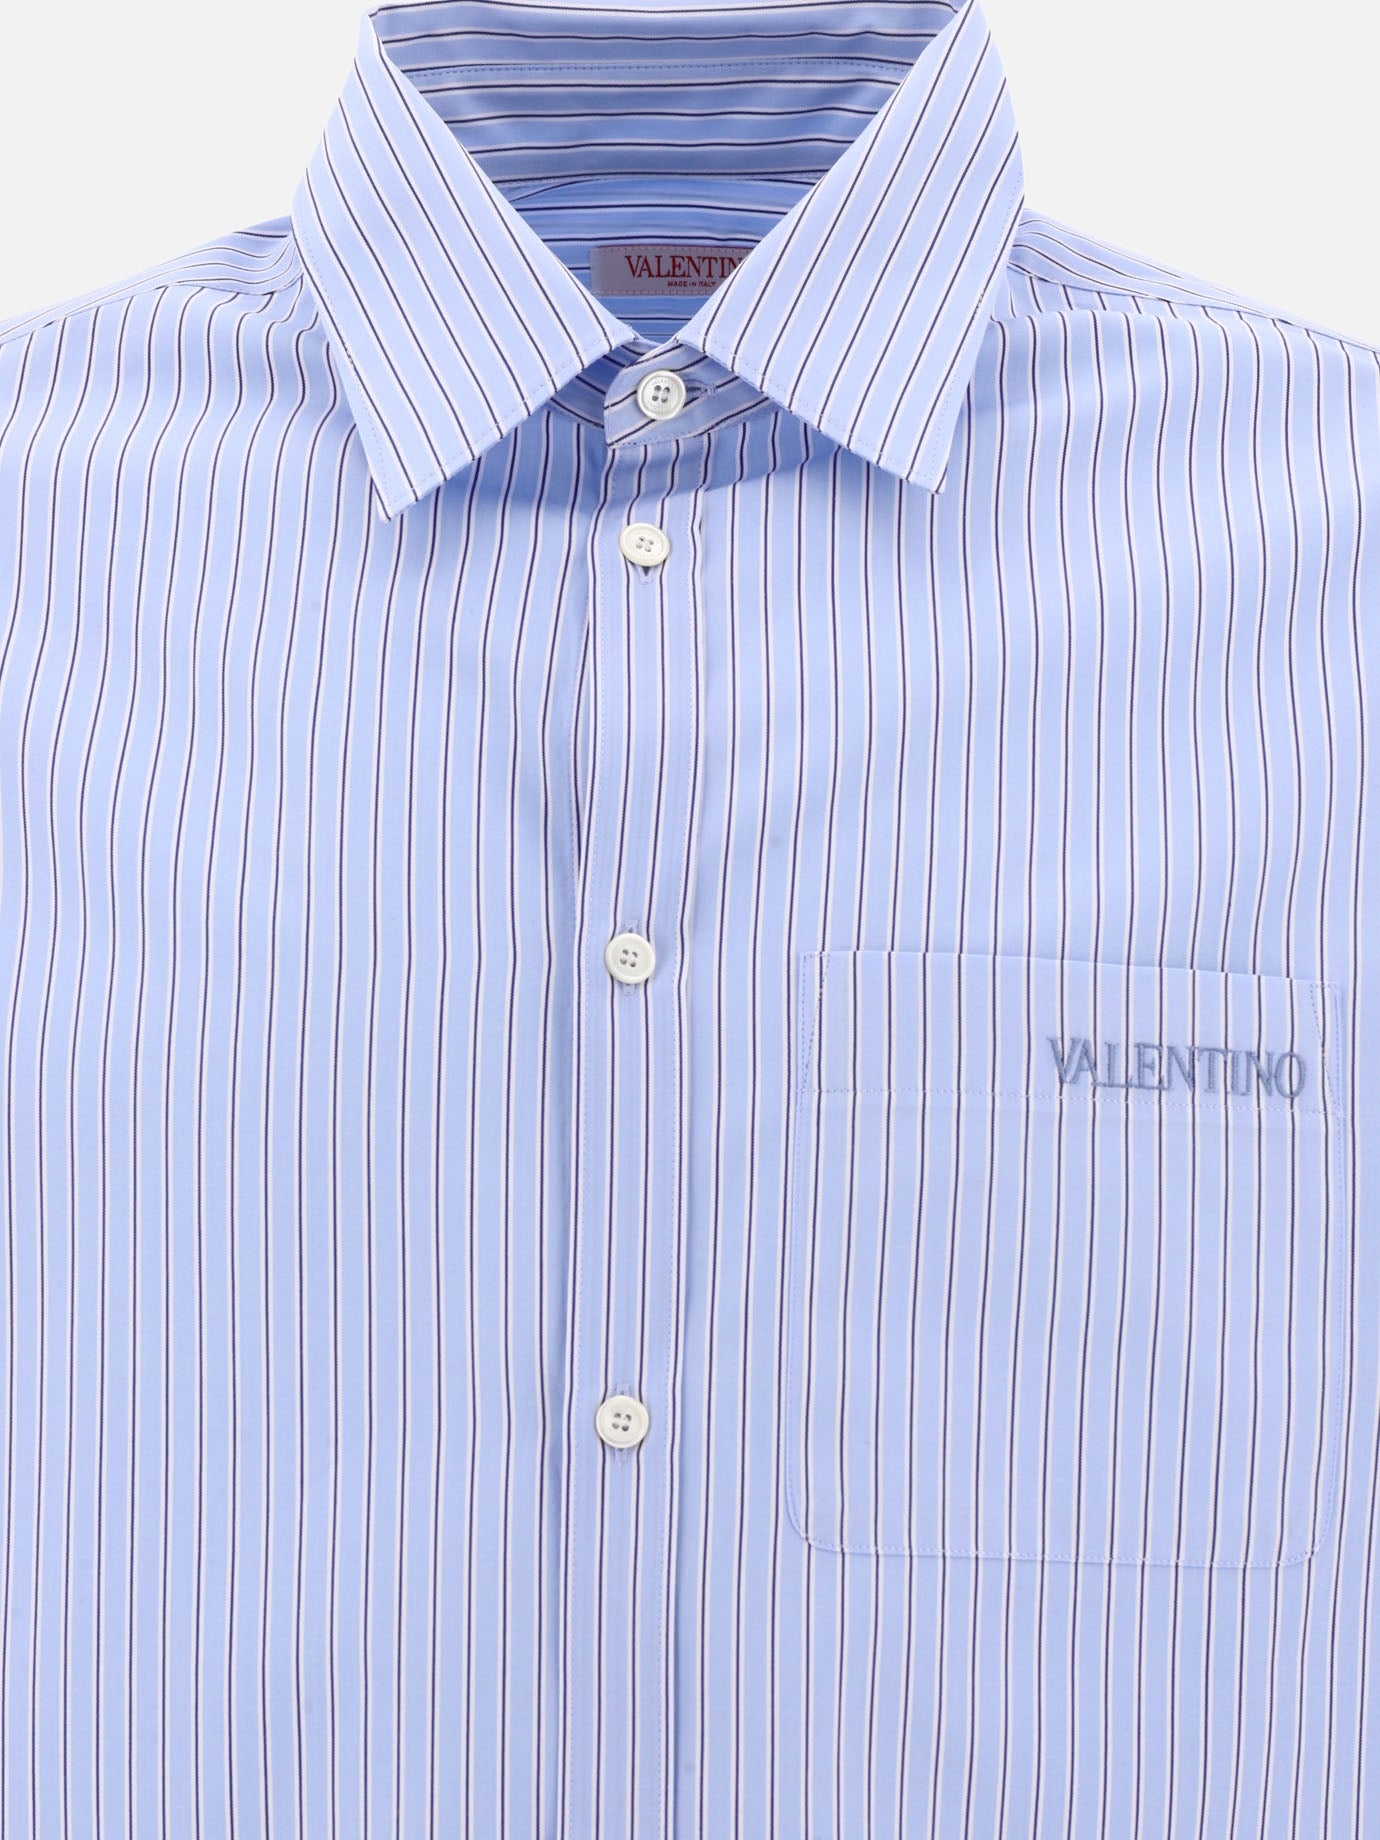 "Valentino" striped shirt